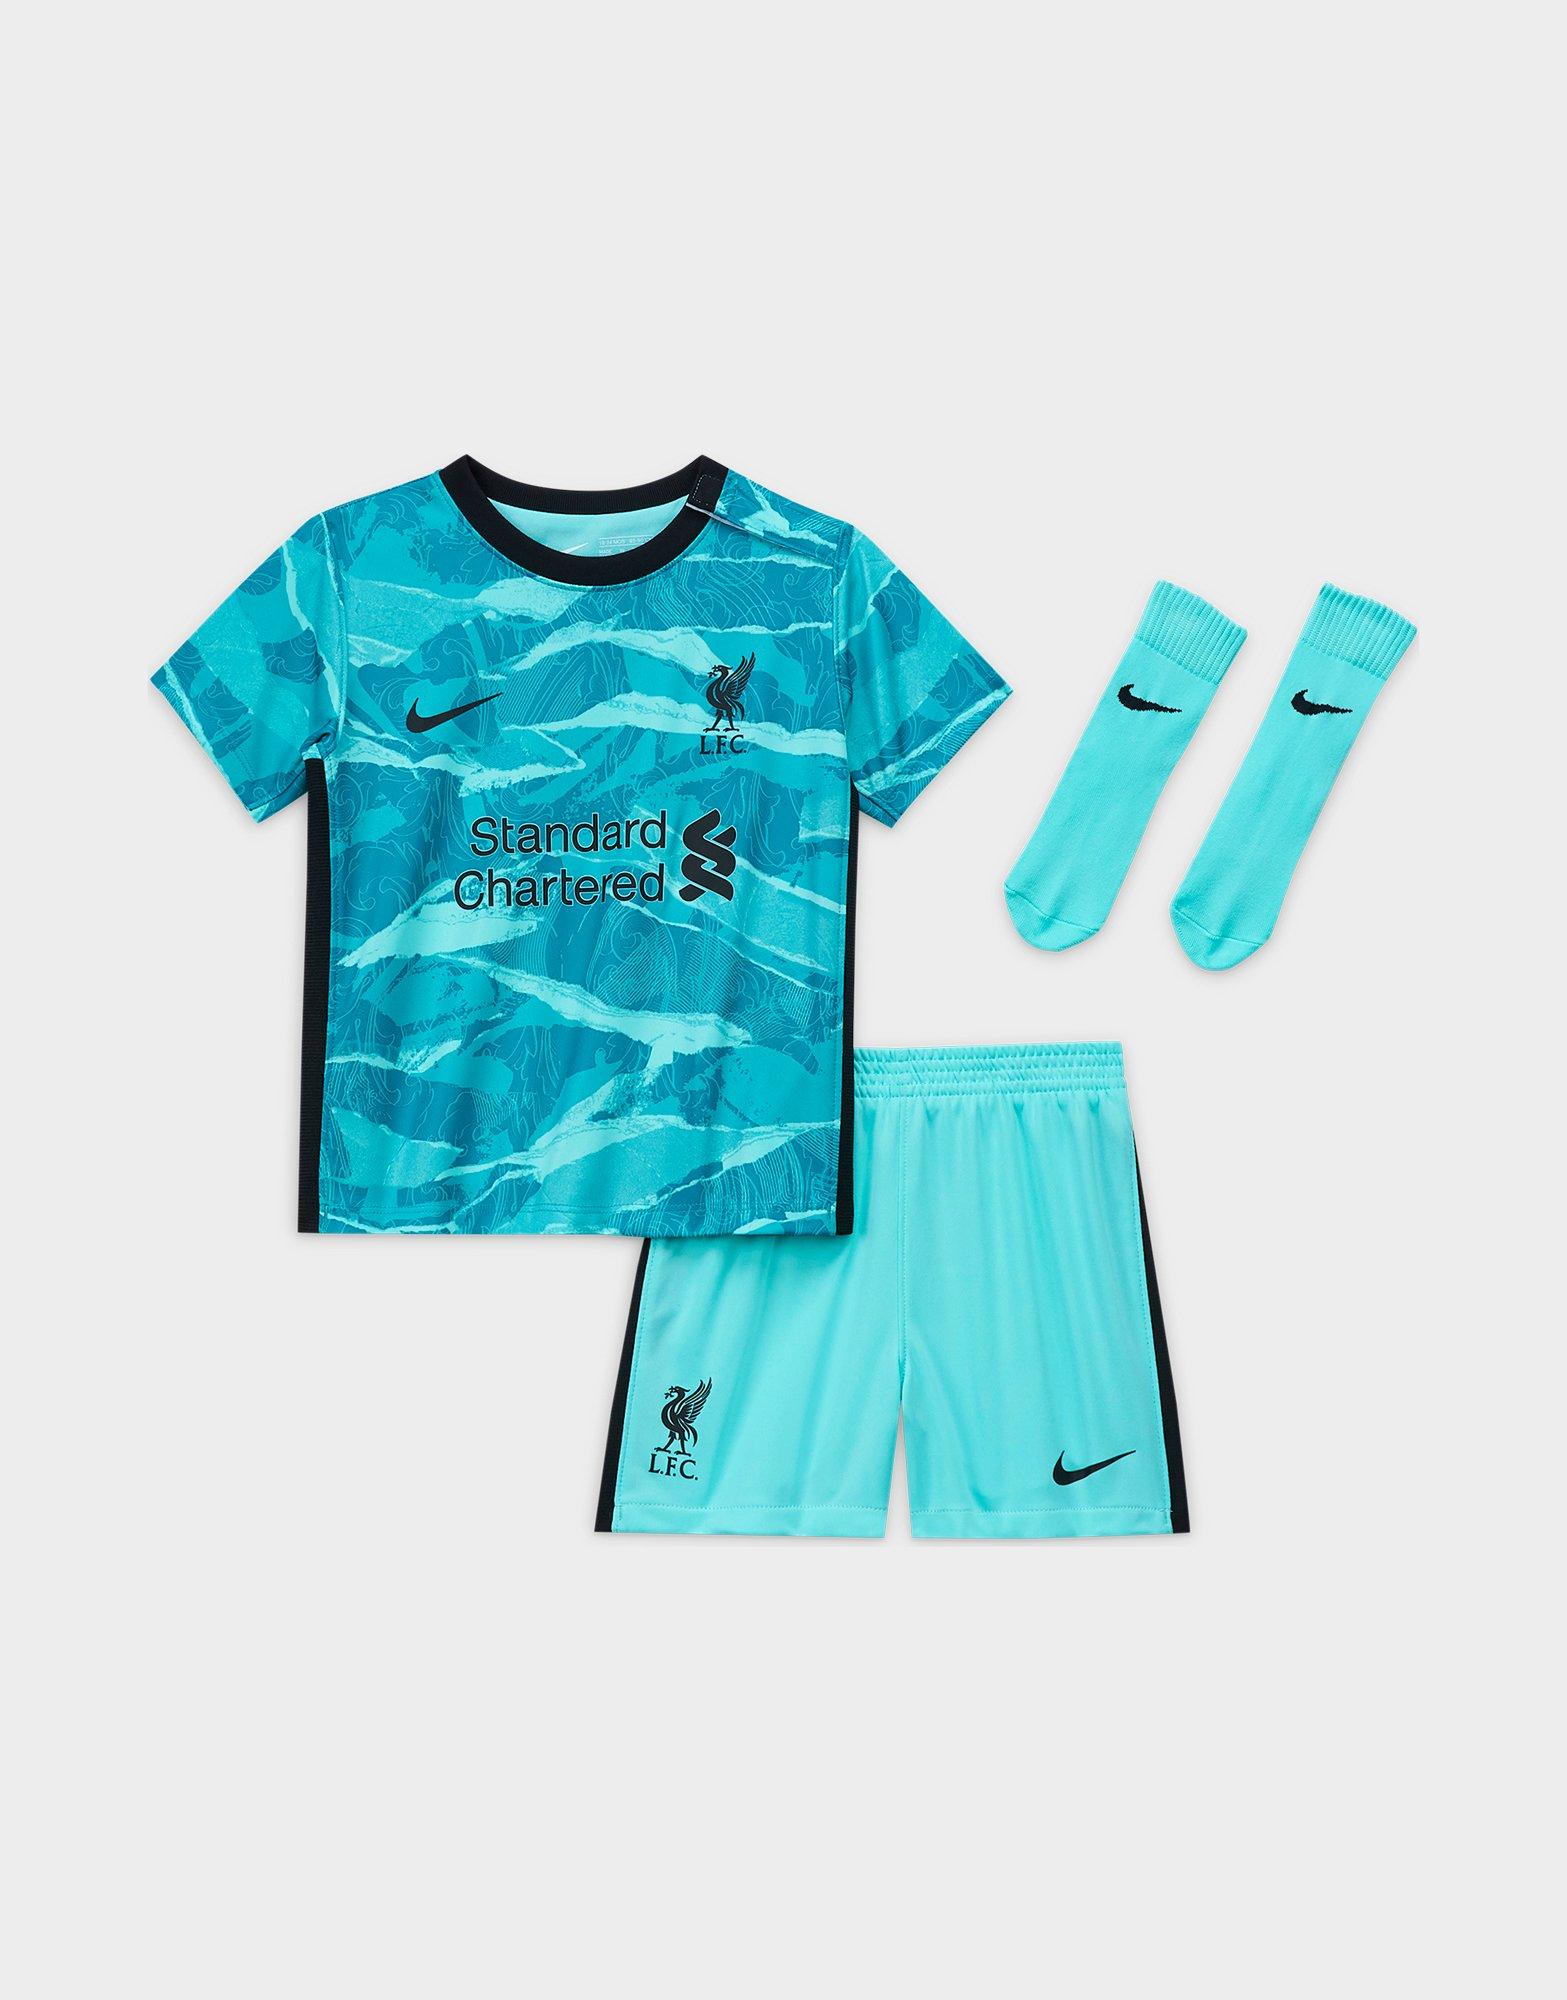 liverpool turquoise kit